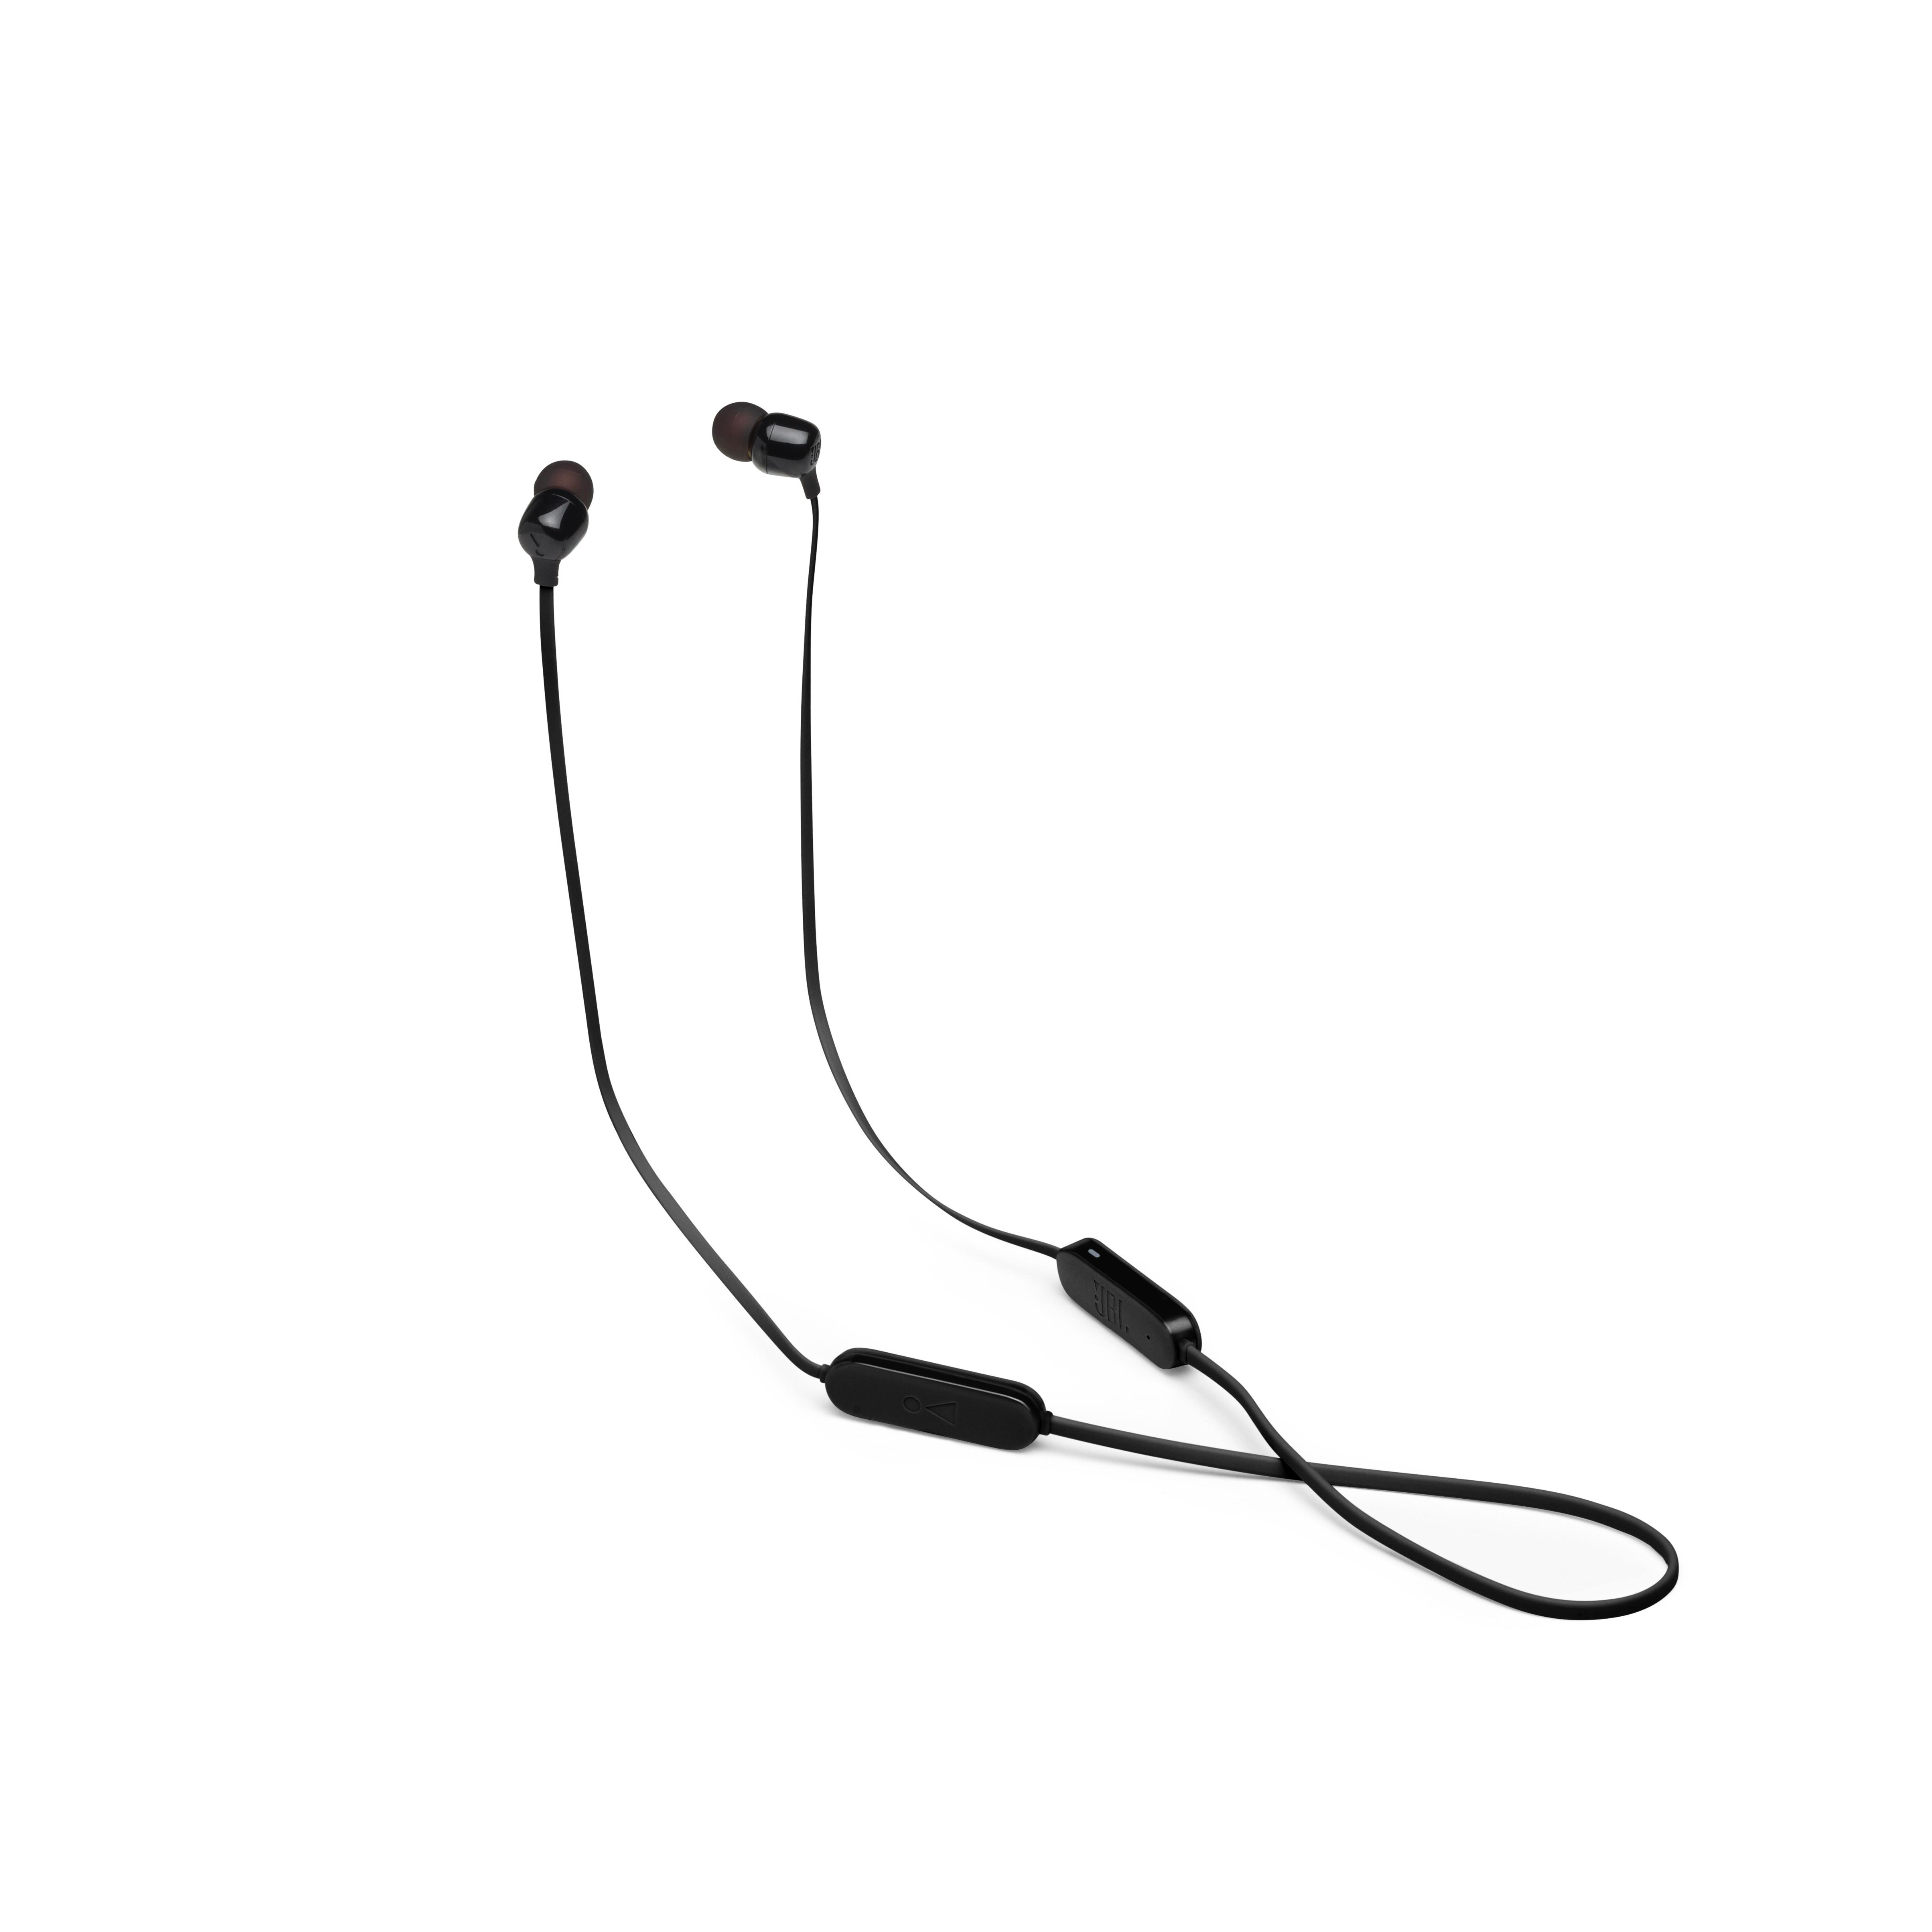 Tune JBL Kopfhörer Black 175, Bluetooth In-ear